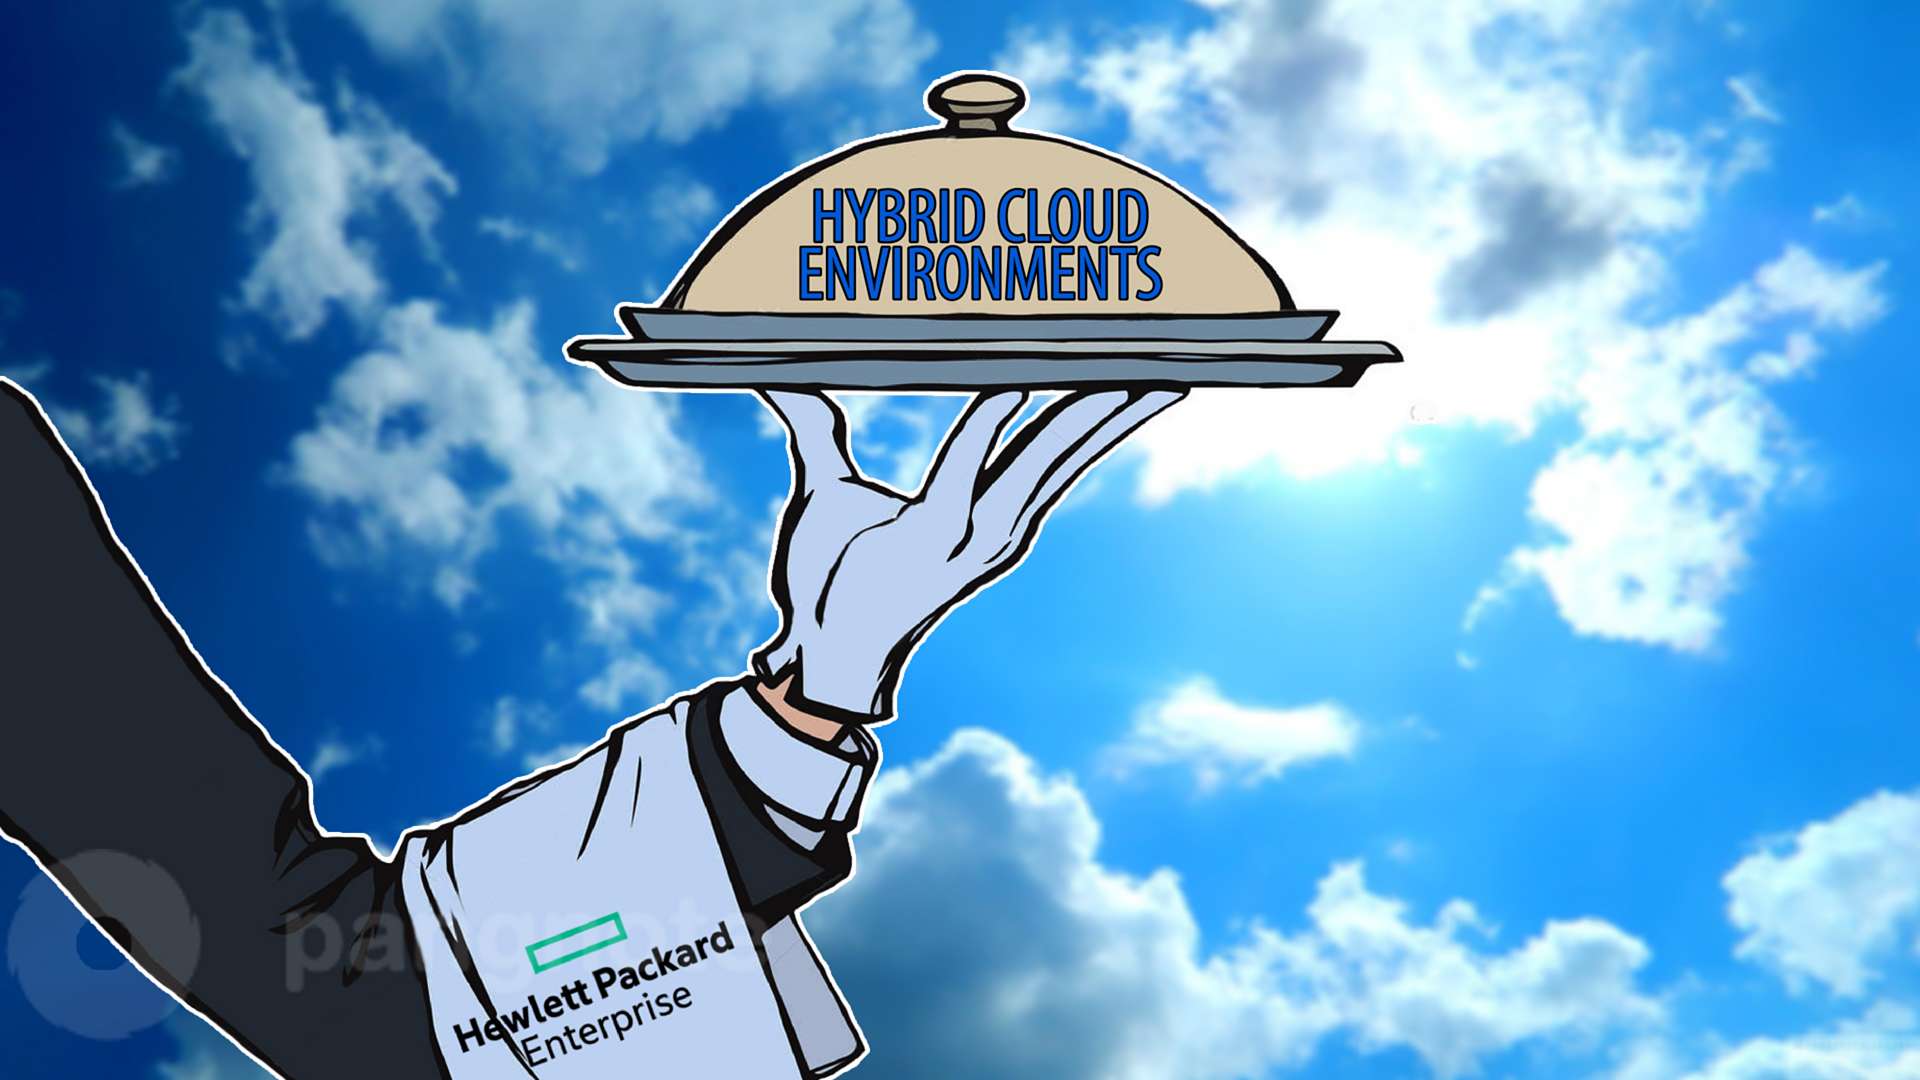 Hewlett Packard Enterprise presented solutions for hybrid cloud environment